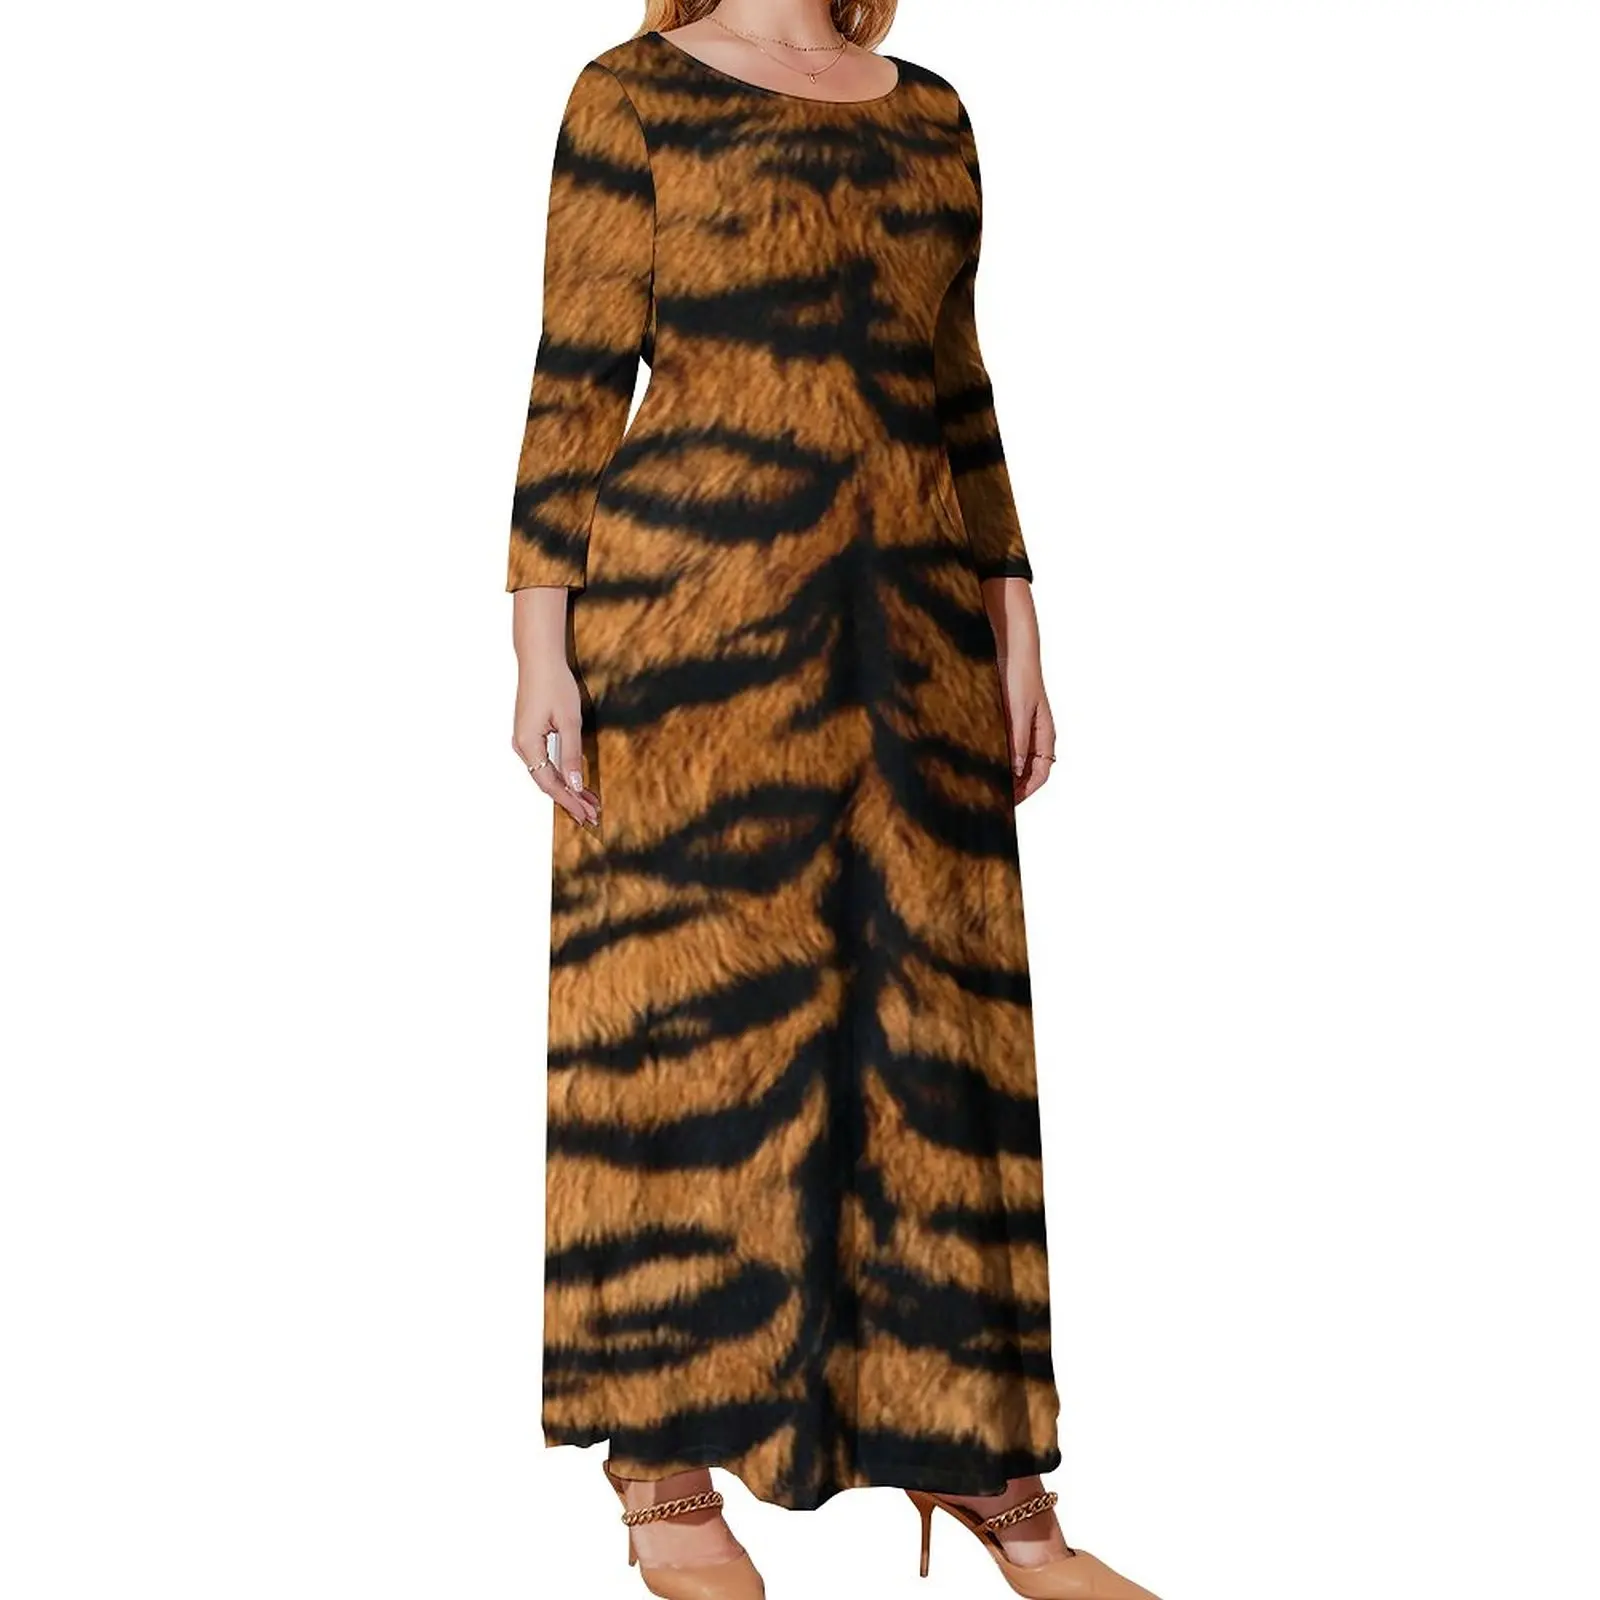 Unique Tiger Print Dress Wild Animal Fur Elegant Maxi Dress Street Style Bohemia Long Dresses Graphic Clothing Plus Size 4XL 5XL